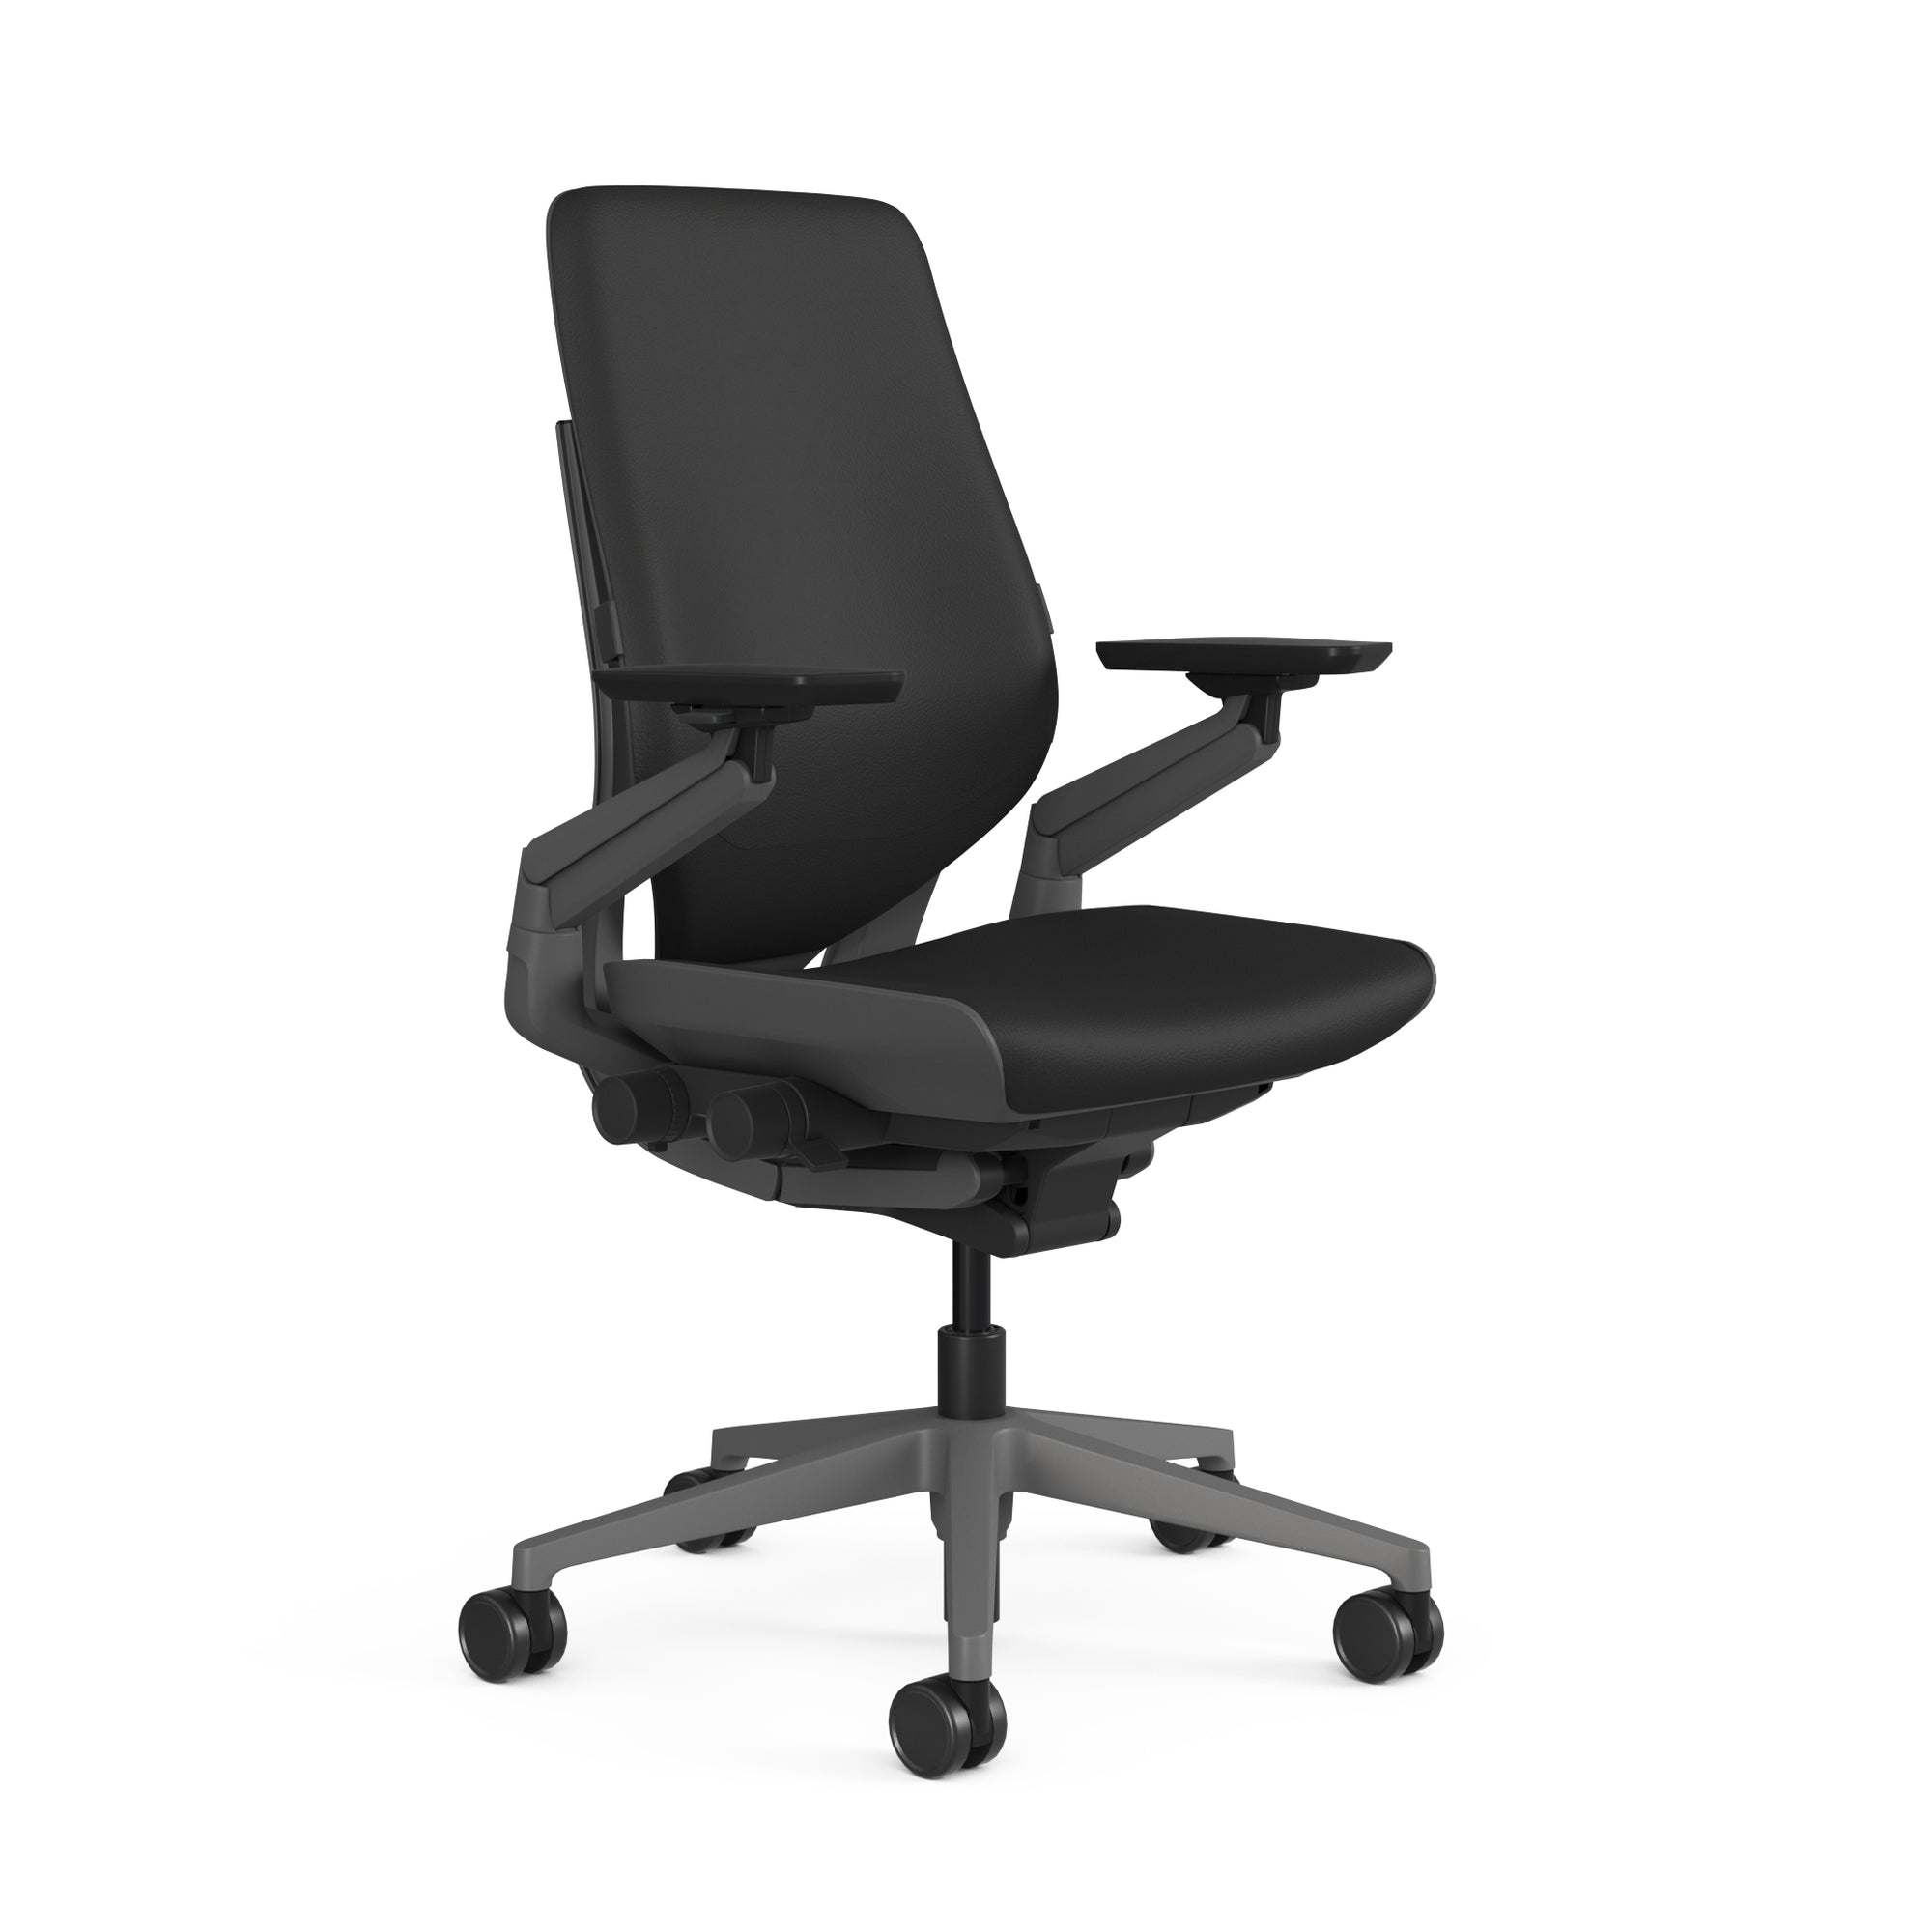 Steelcase Steelcase Gesture Office Chair シェルバック、ダークonダークフレーム、腰椎サポート High  Height Range (17